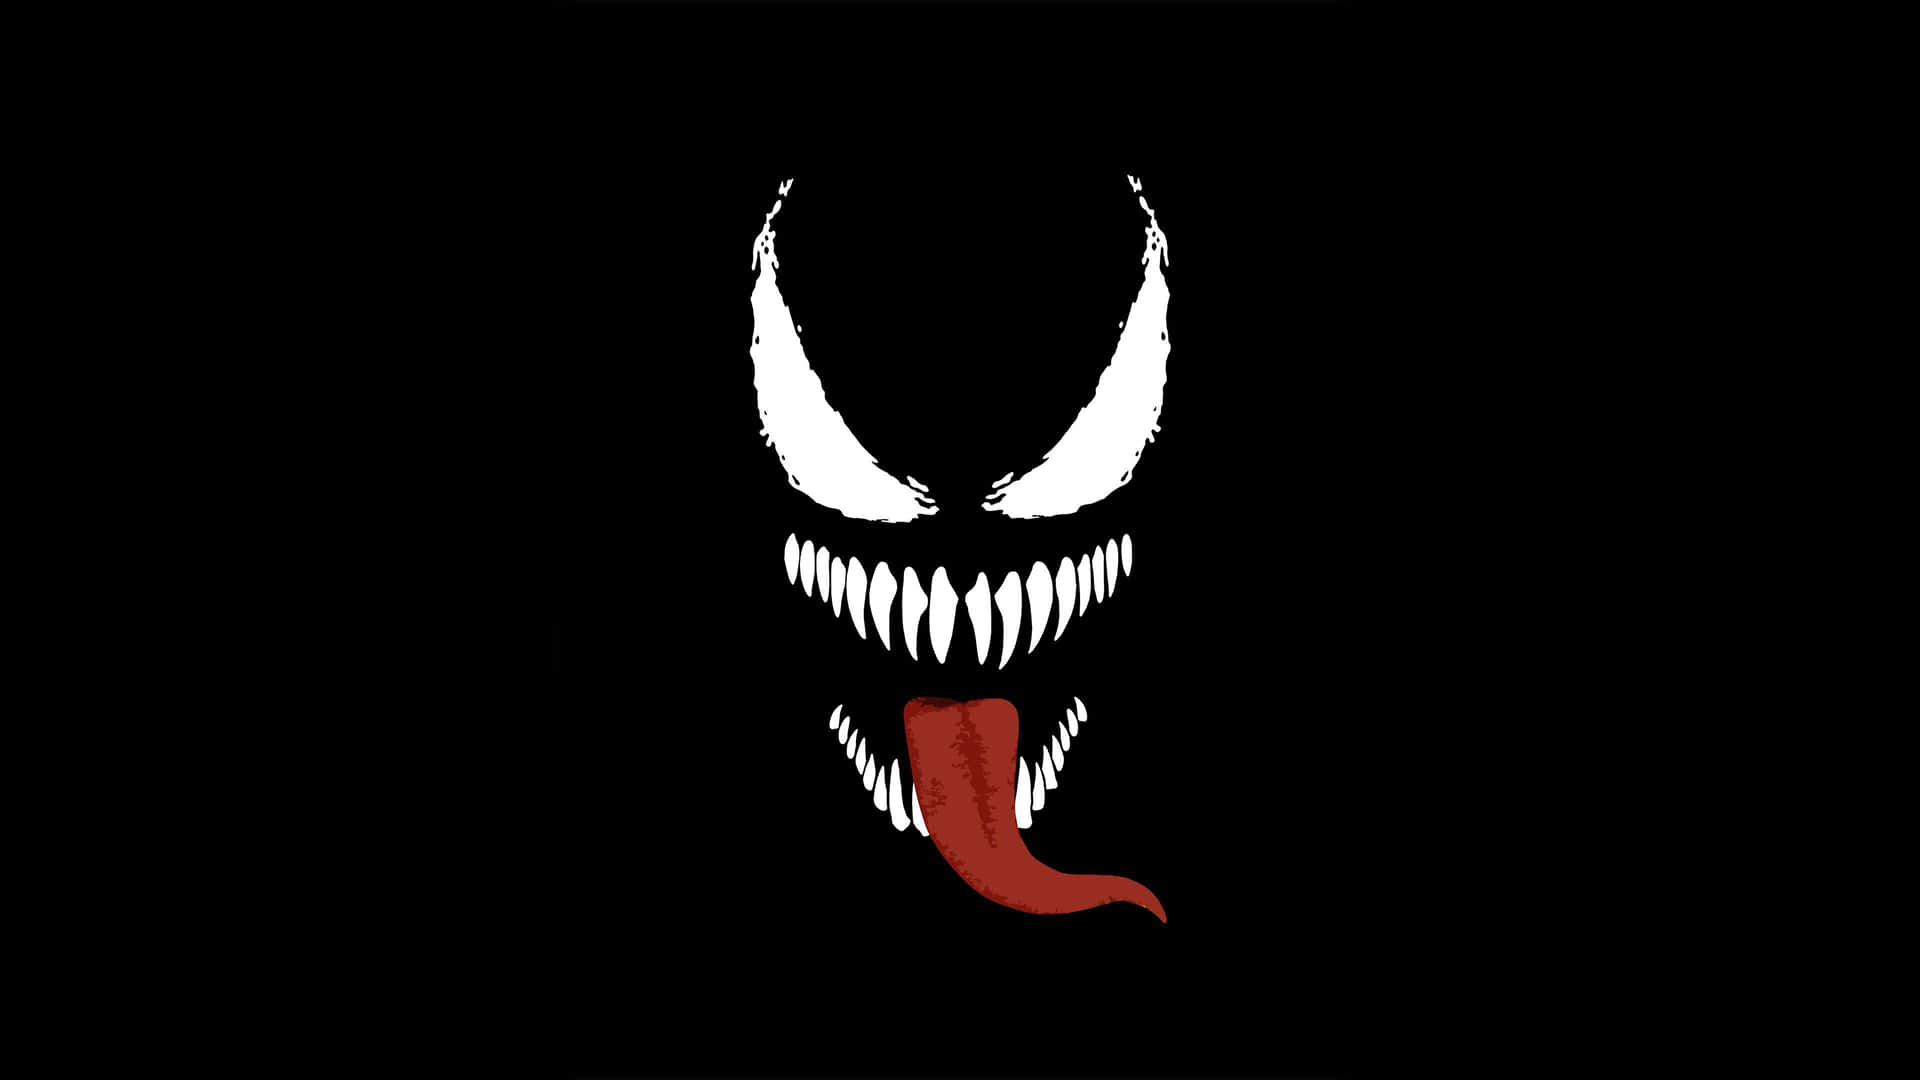 Venom Logo On A Black Background Background